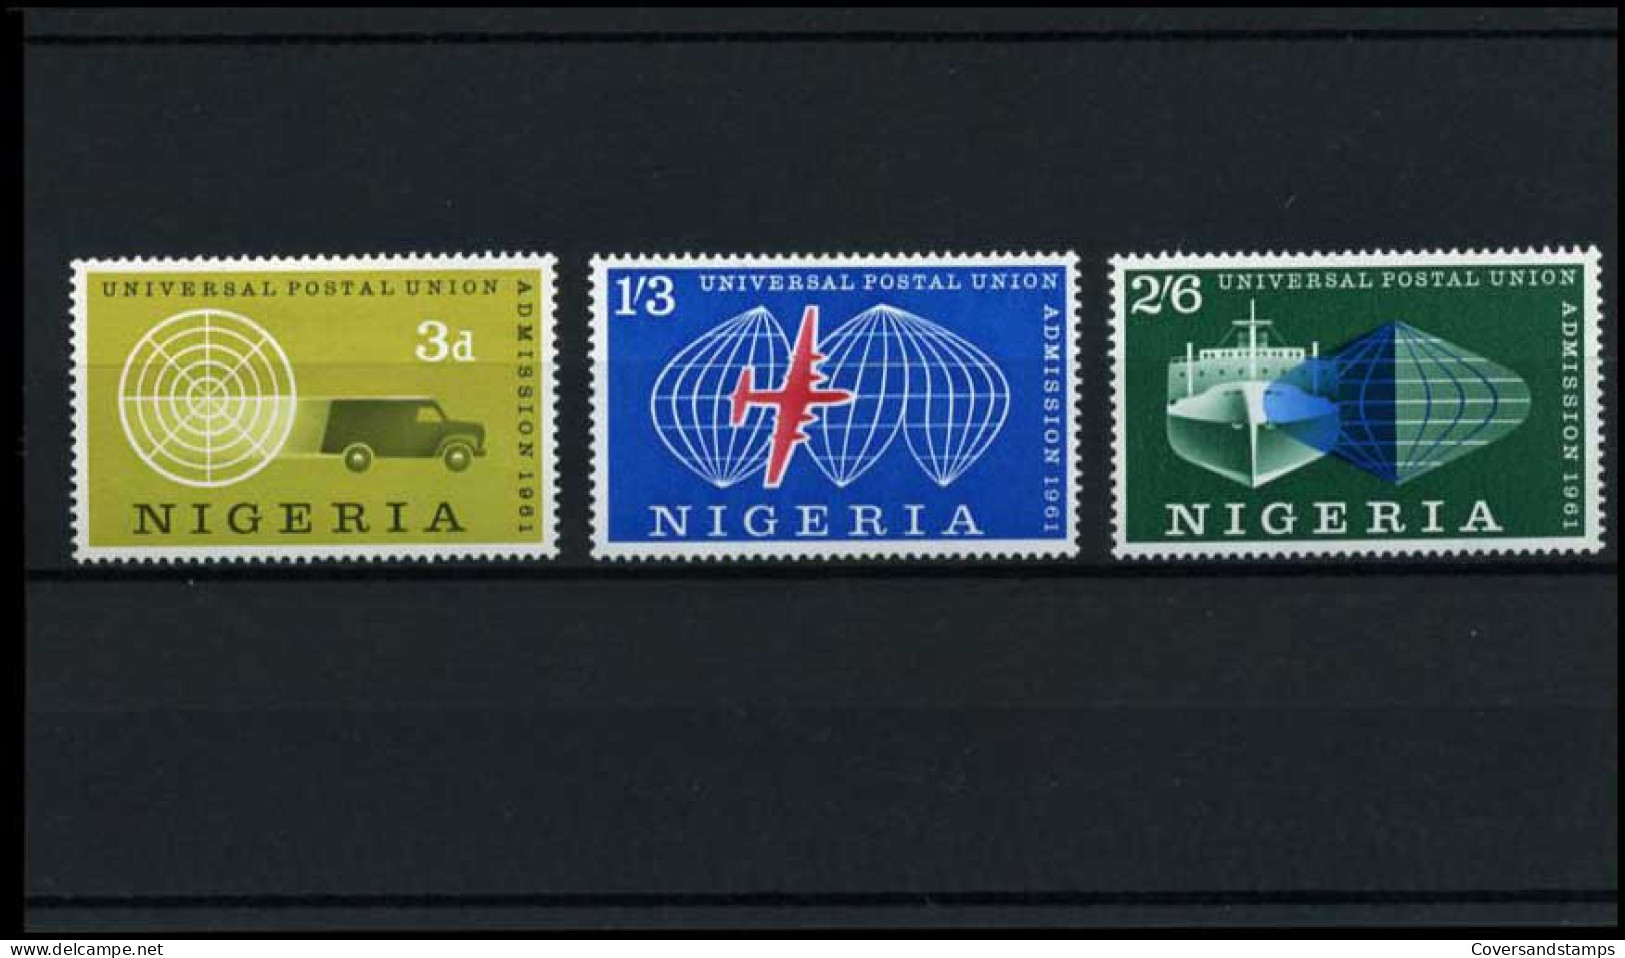 Nigeria - Universal Postal Union - Posta